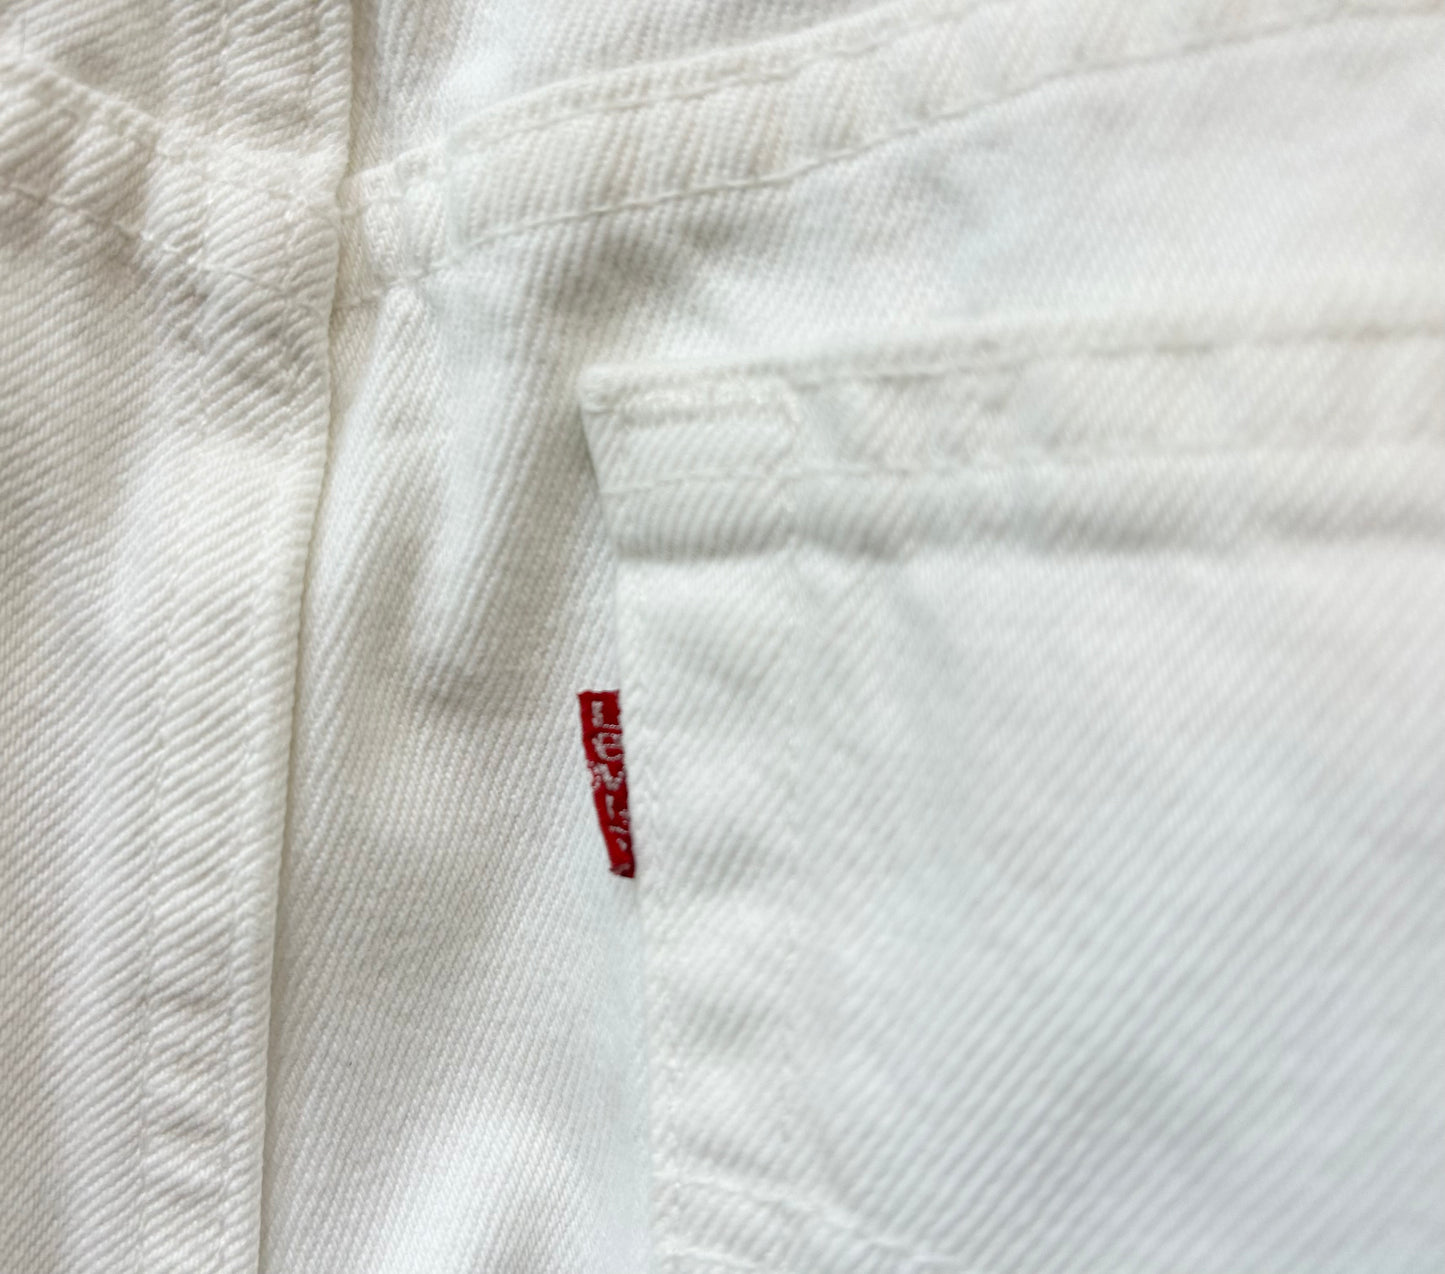 Vintage Denim Pants MADE IN USA 〜Levi′s 521〜 [E26976]